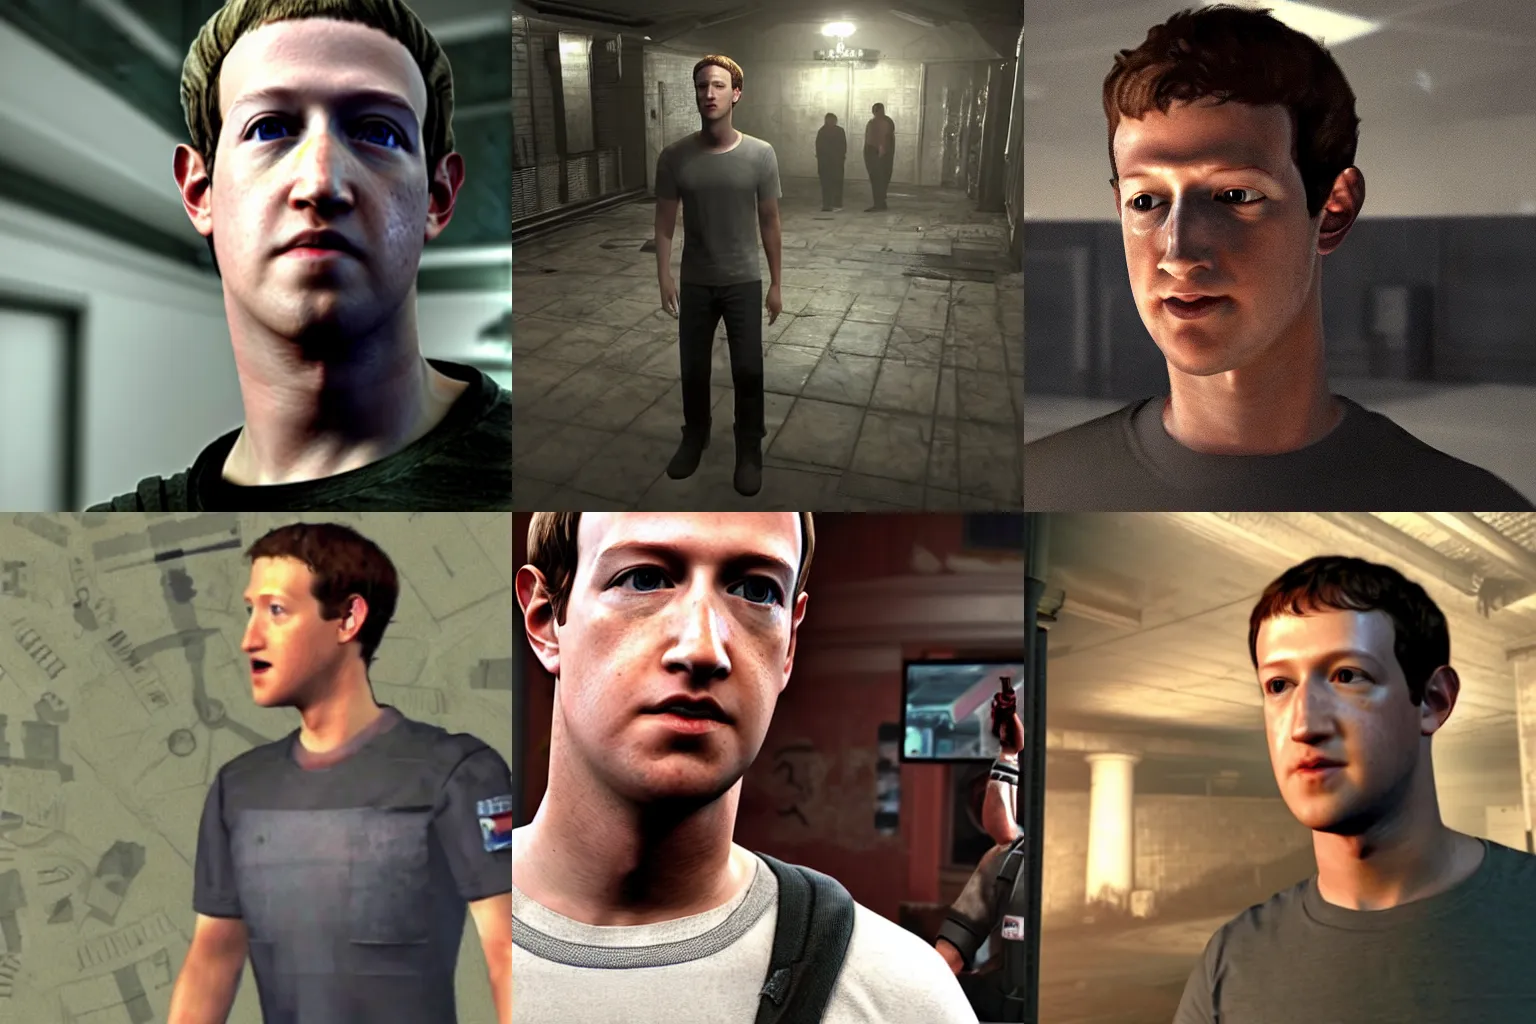 Prompt: Screenshot of Mark Zuckerberg in Resident Evil video game